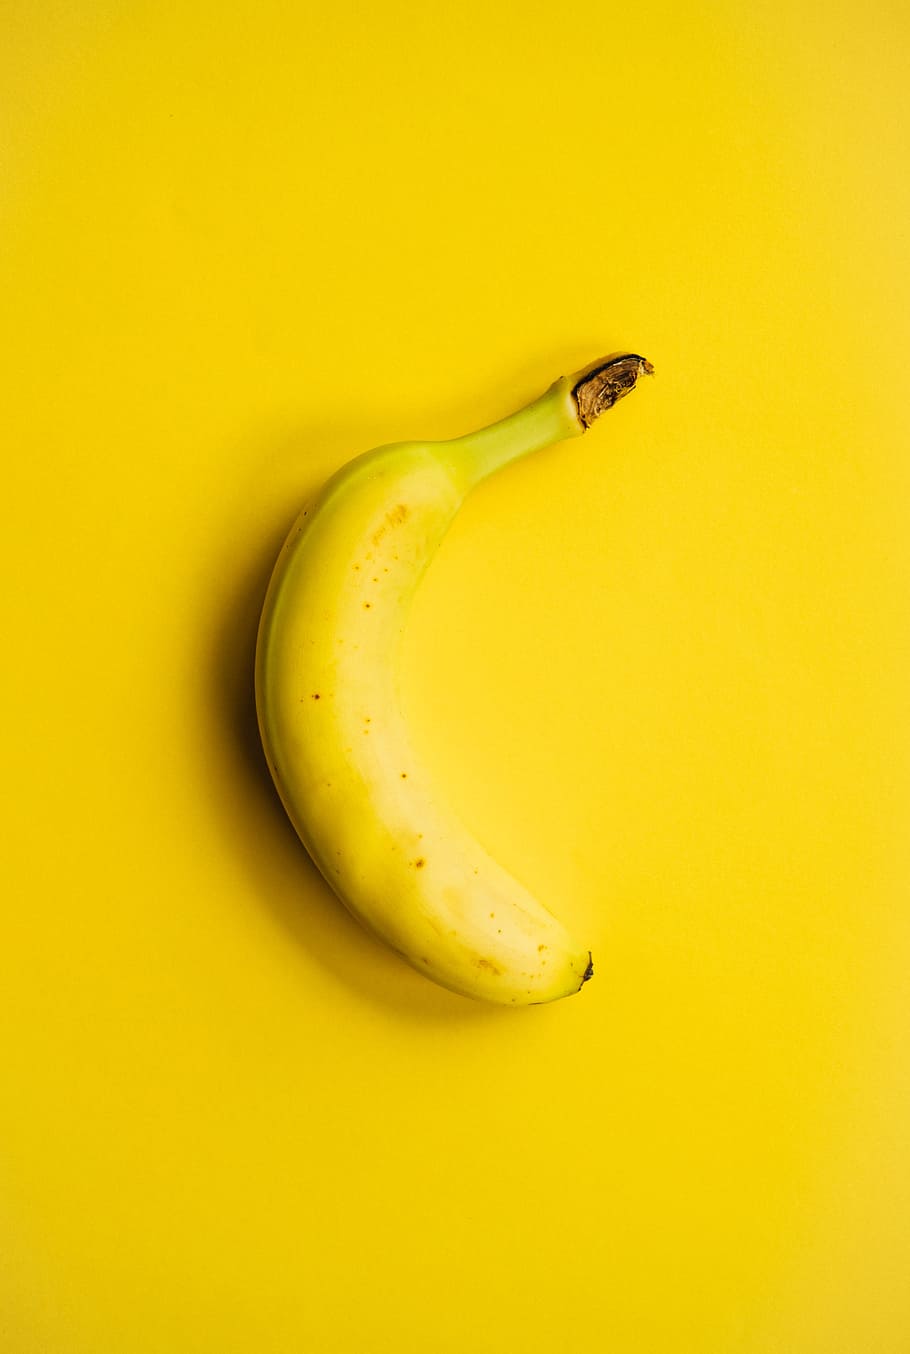 yellow banana fruit on yellow surface, yellow background, unporn